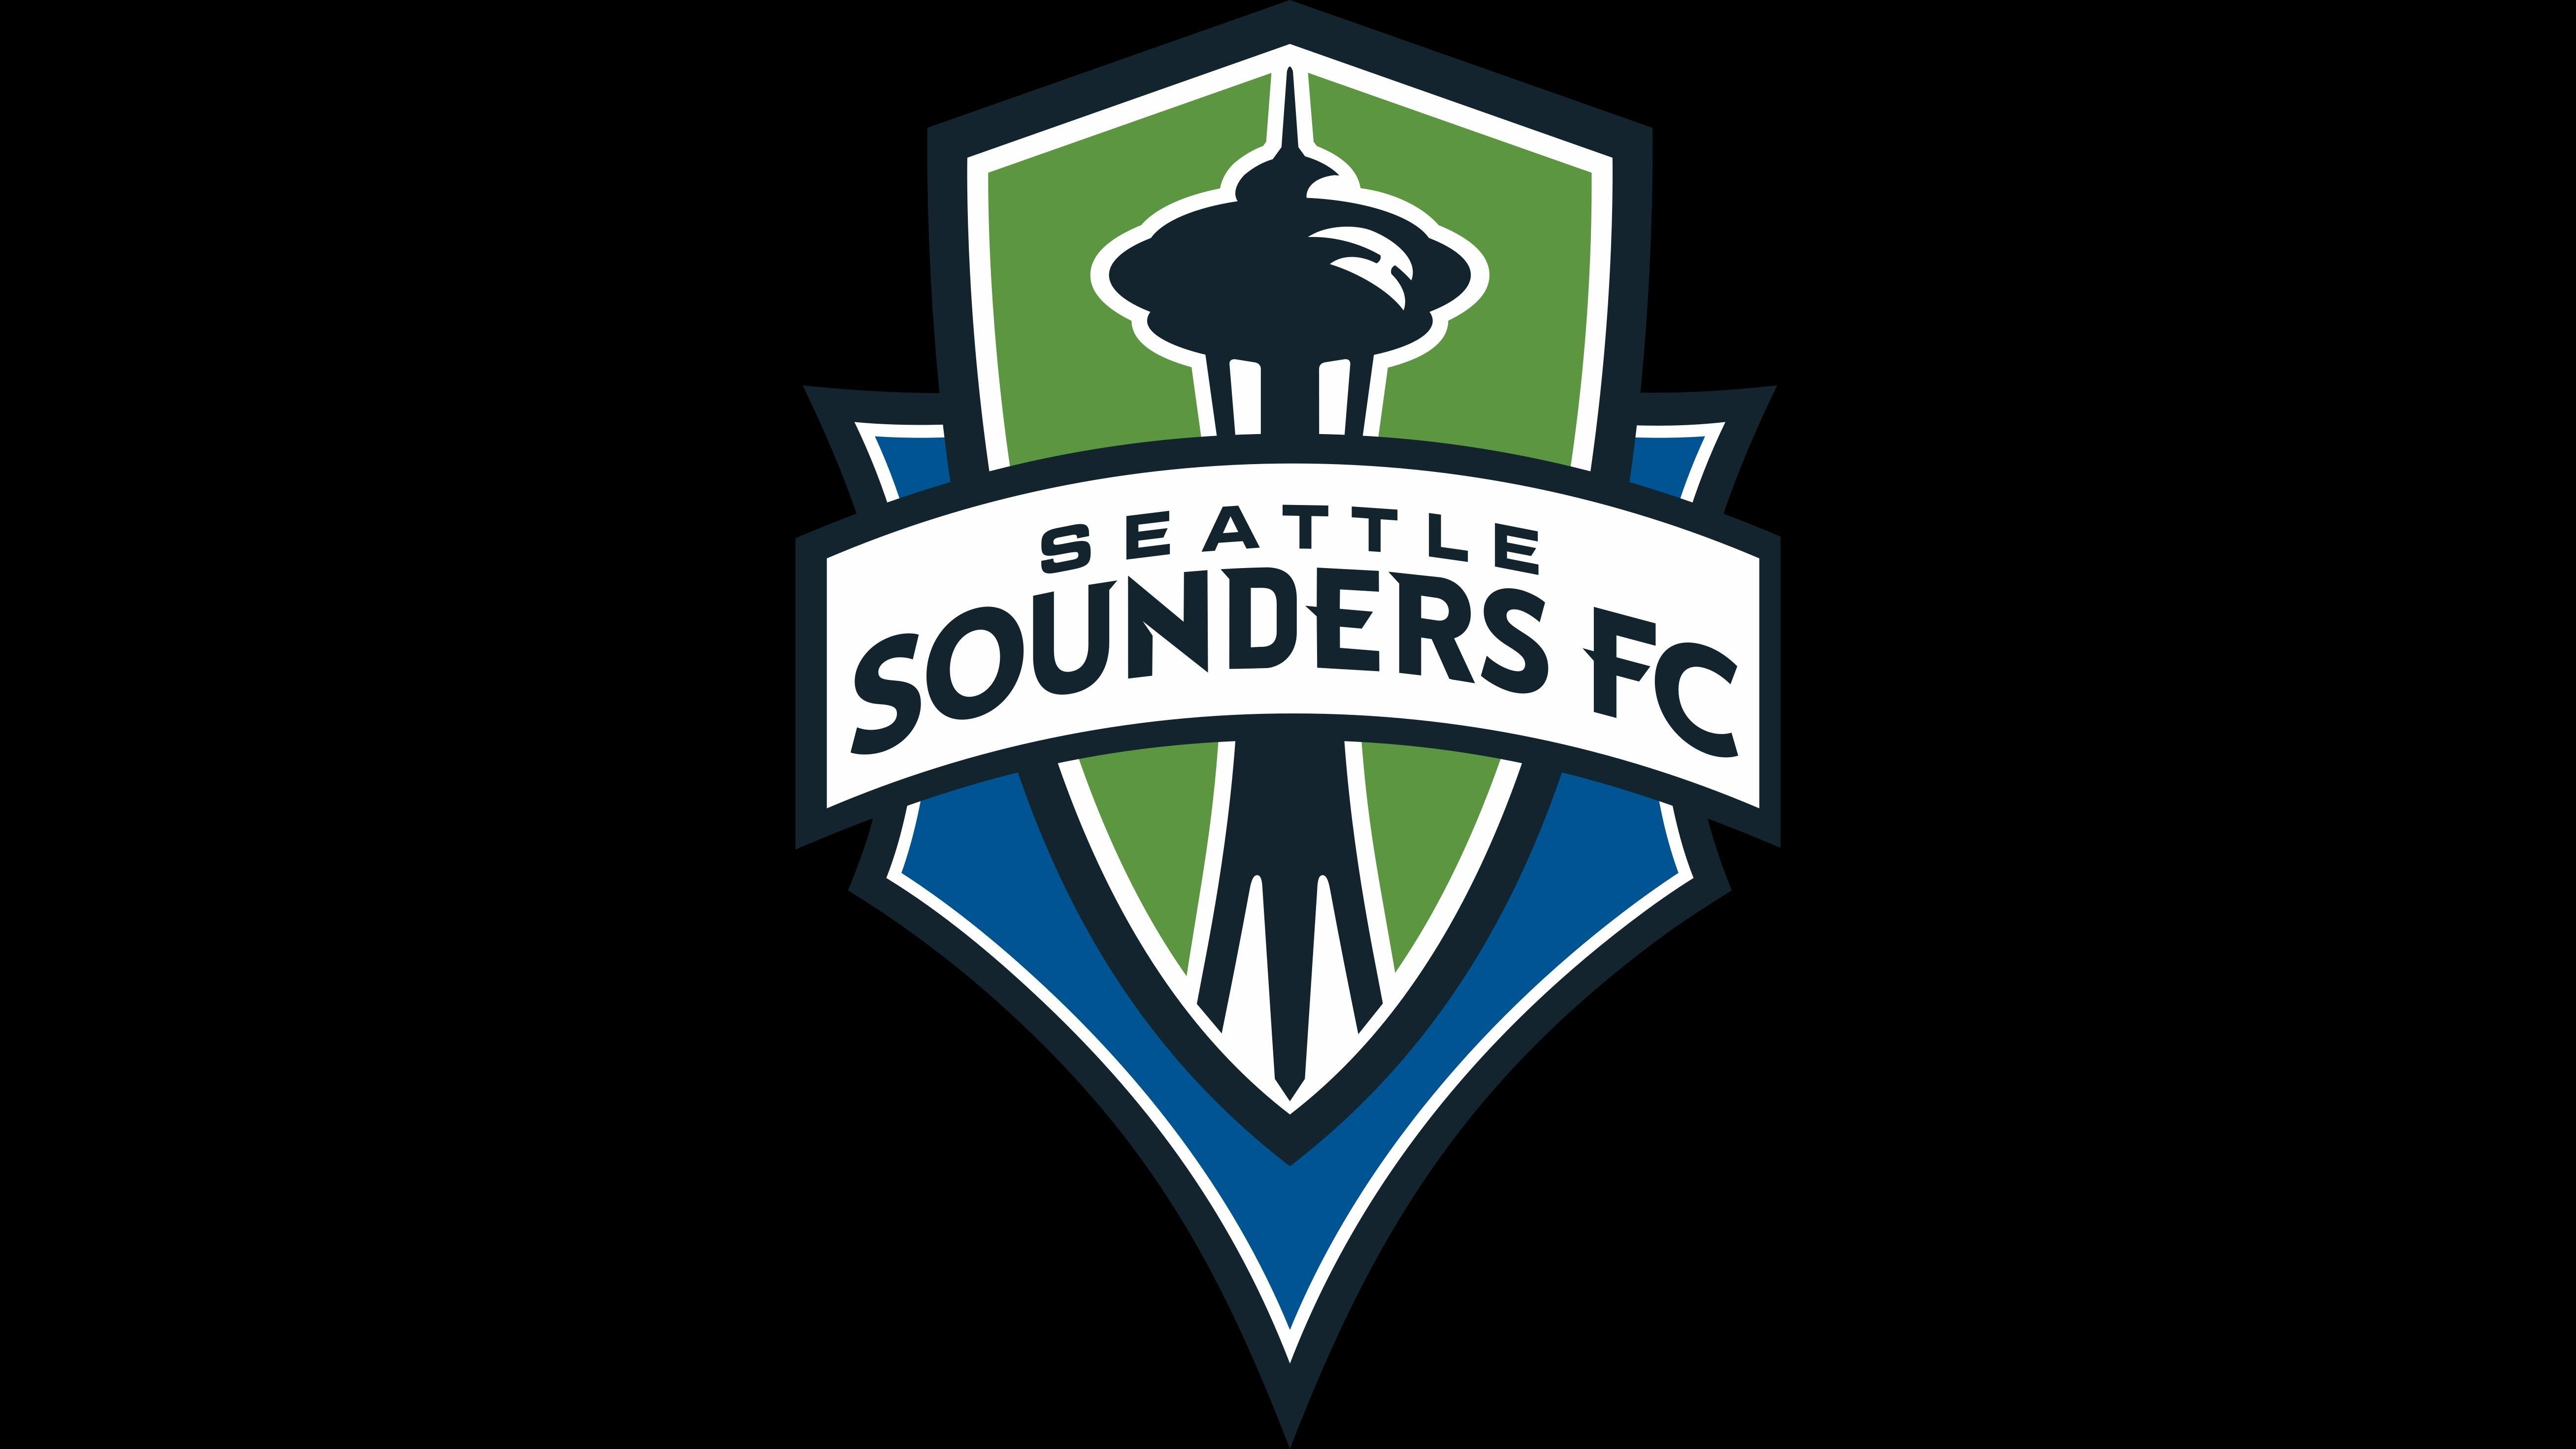 Sounders Logo - Seattle Sounders FC Logo Soccer wallpaper 2018 in Soccer